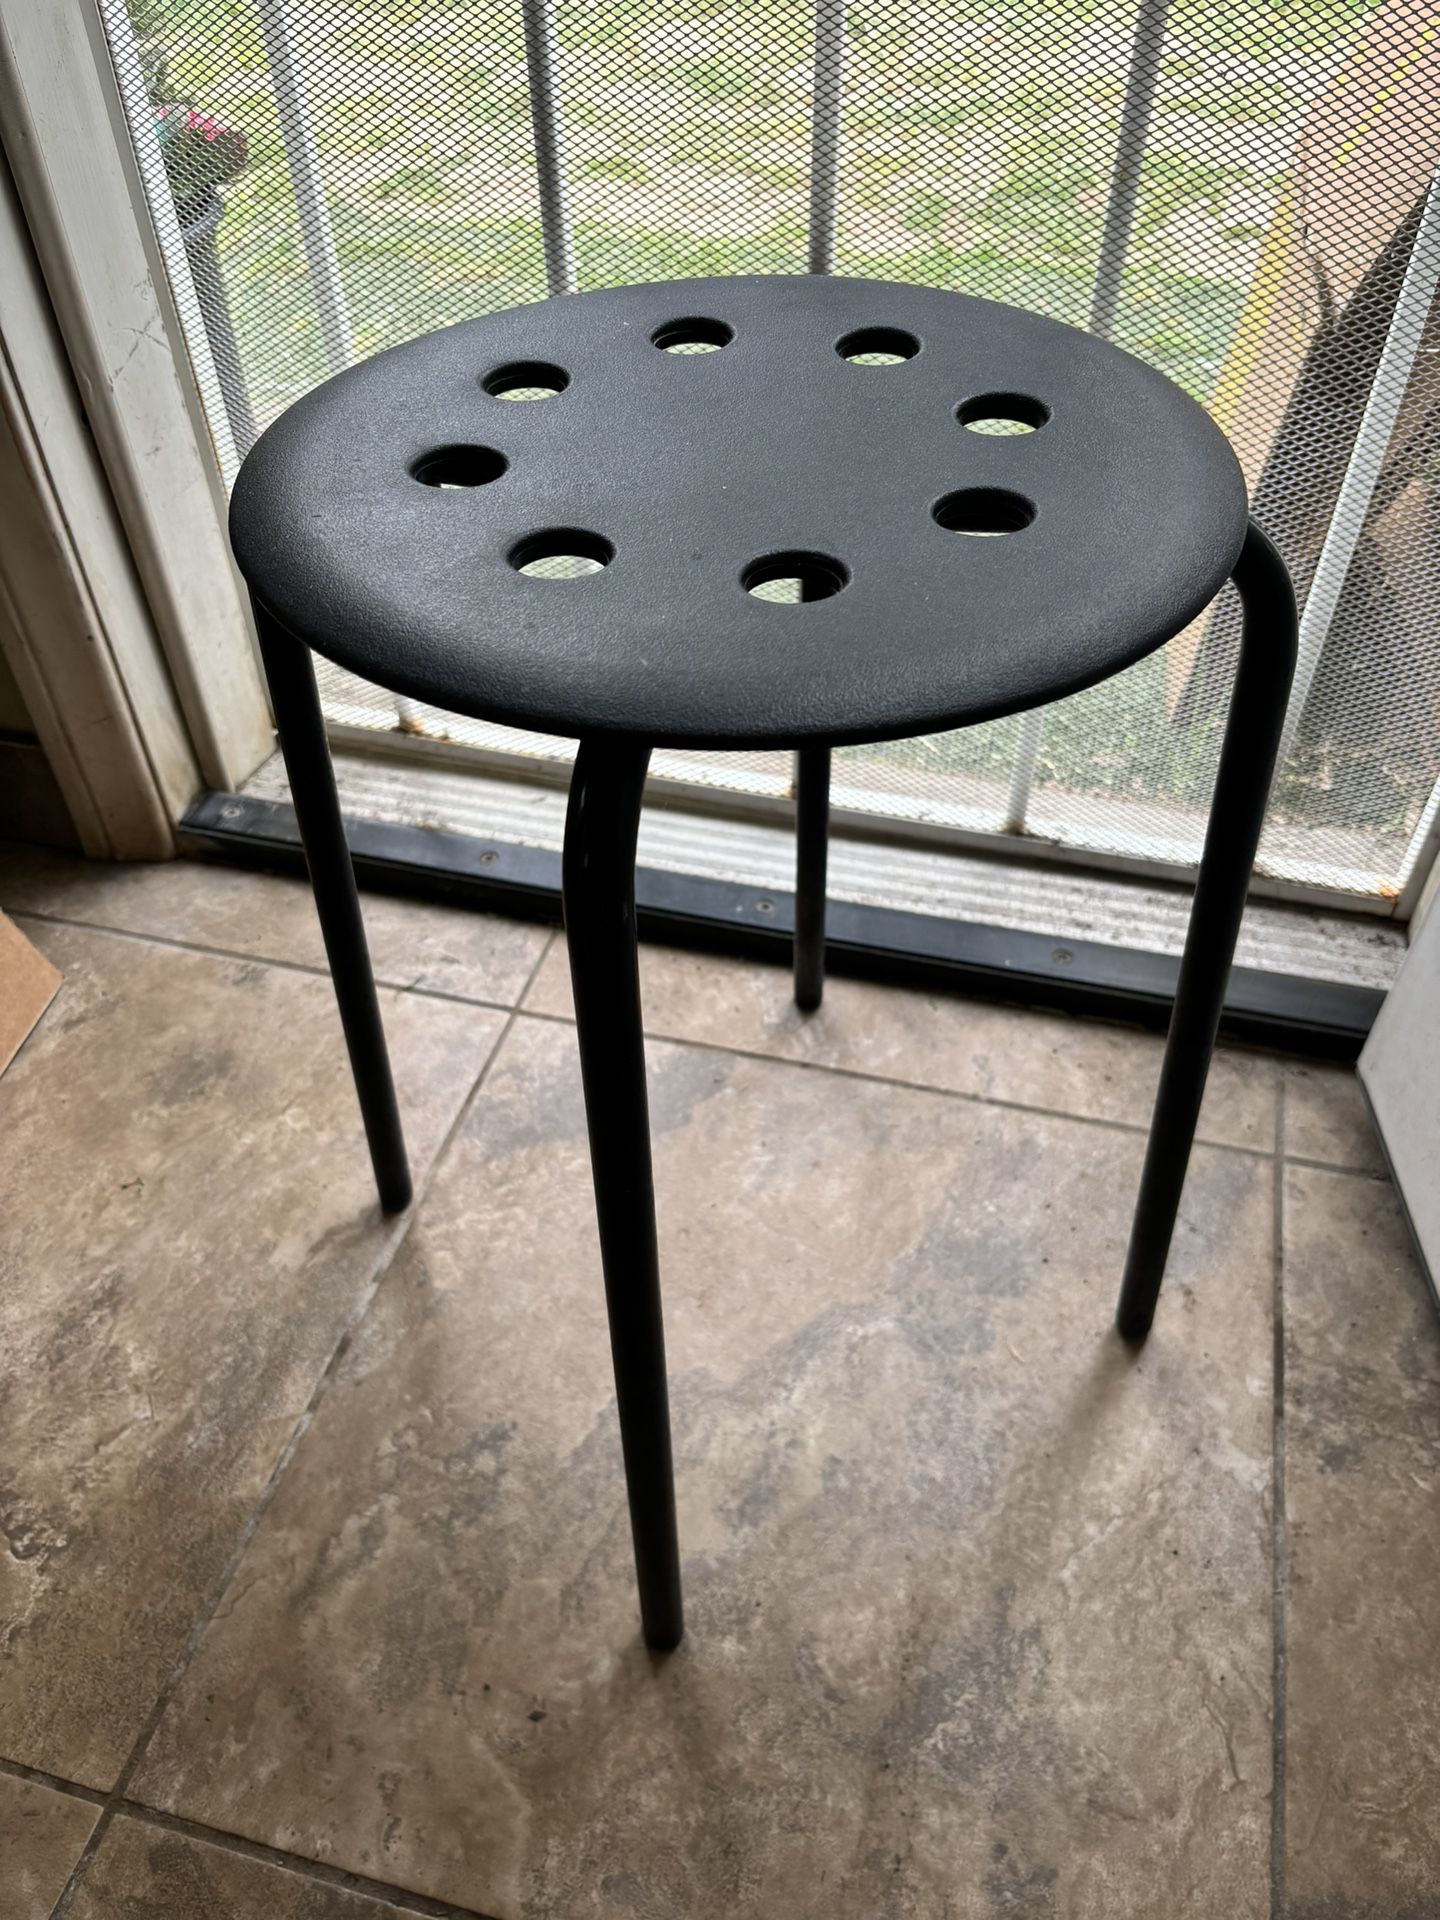 IKEA stool $10 OBO